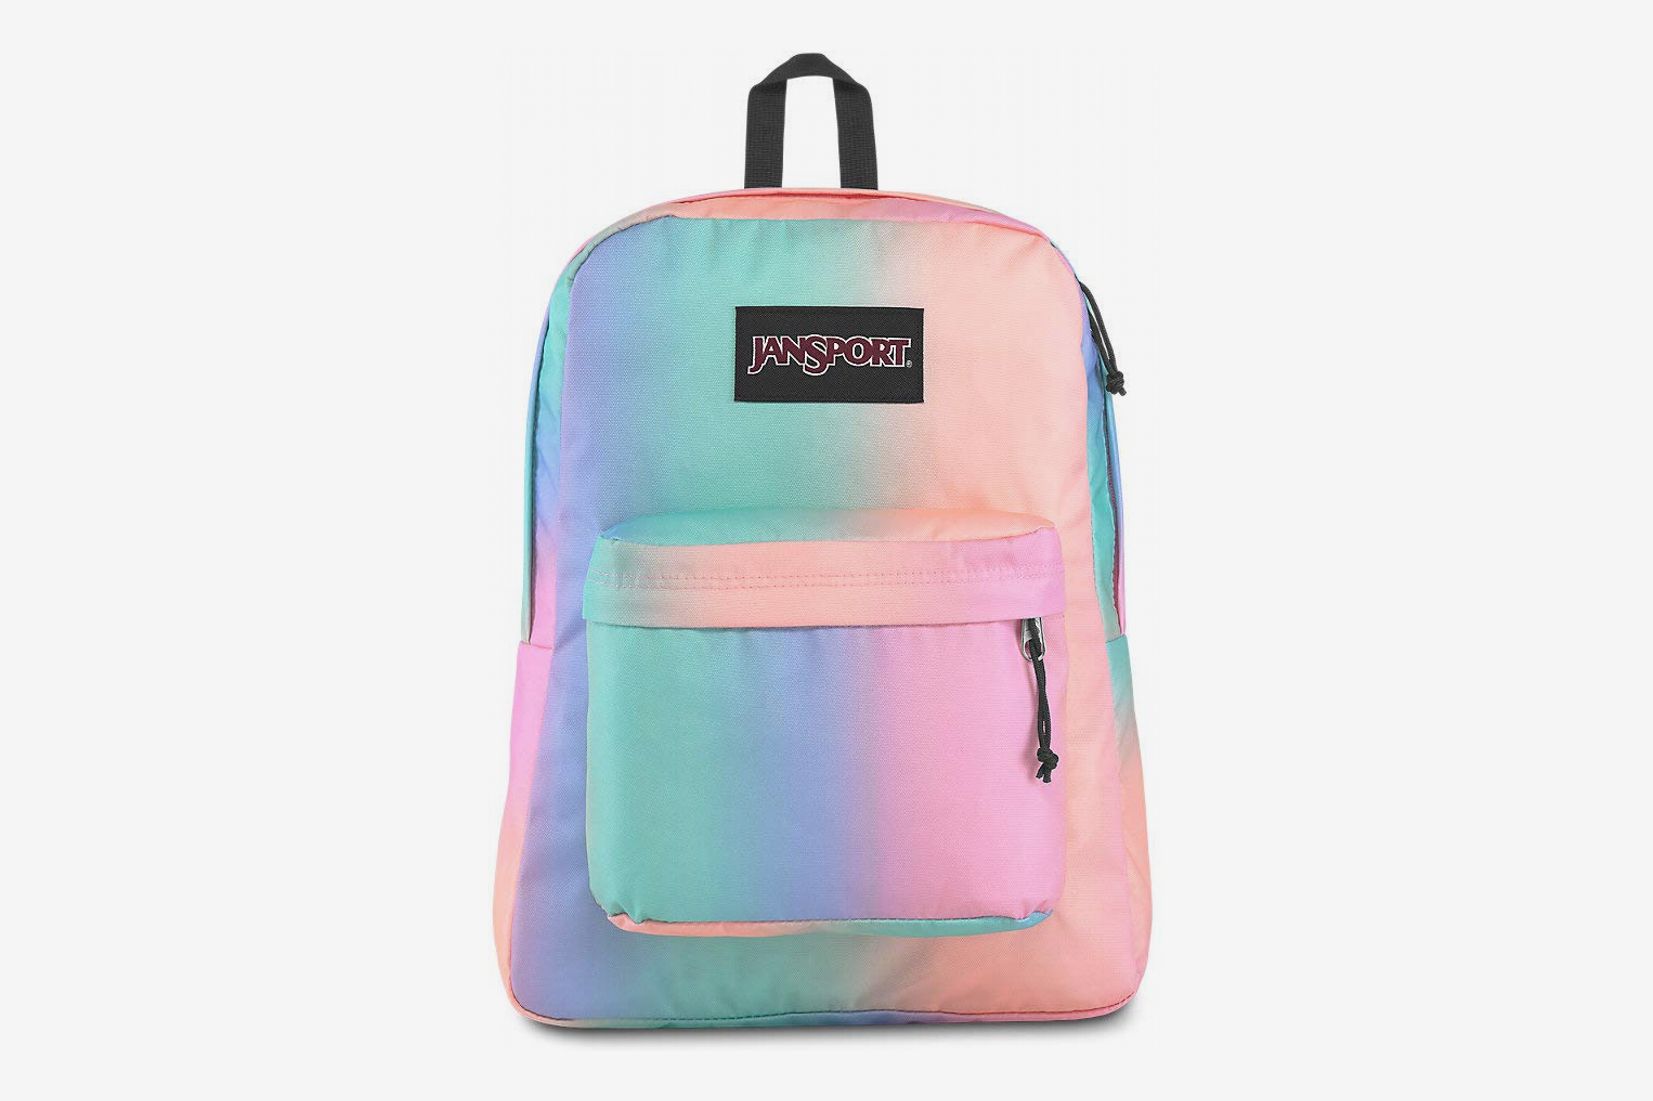 Purple SHOULDCAT Cute Backpack for Teen Girls Travel Laptop Backpack School Bookbags Water Resistant College Student Backpack for Girls